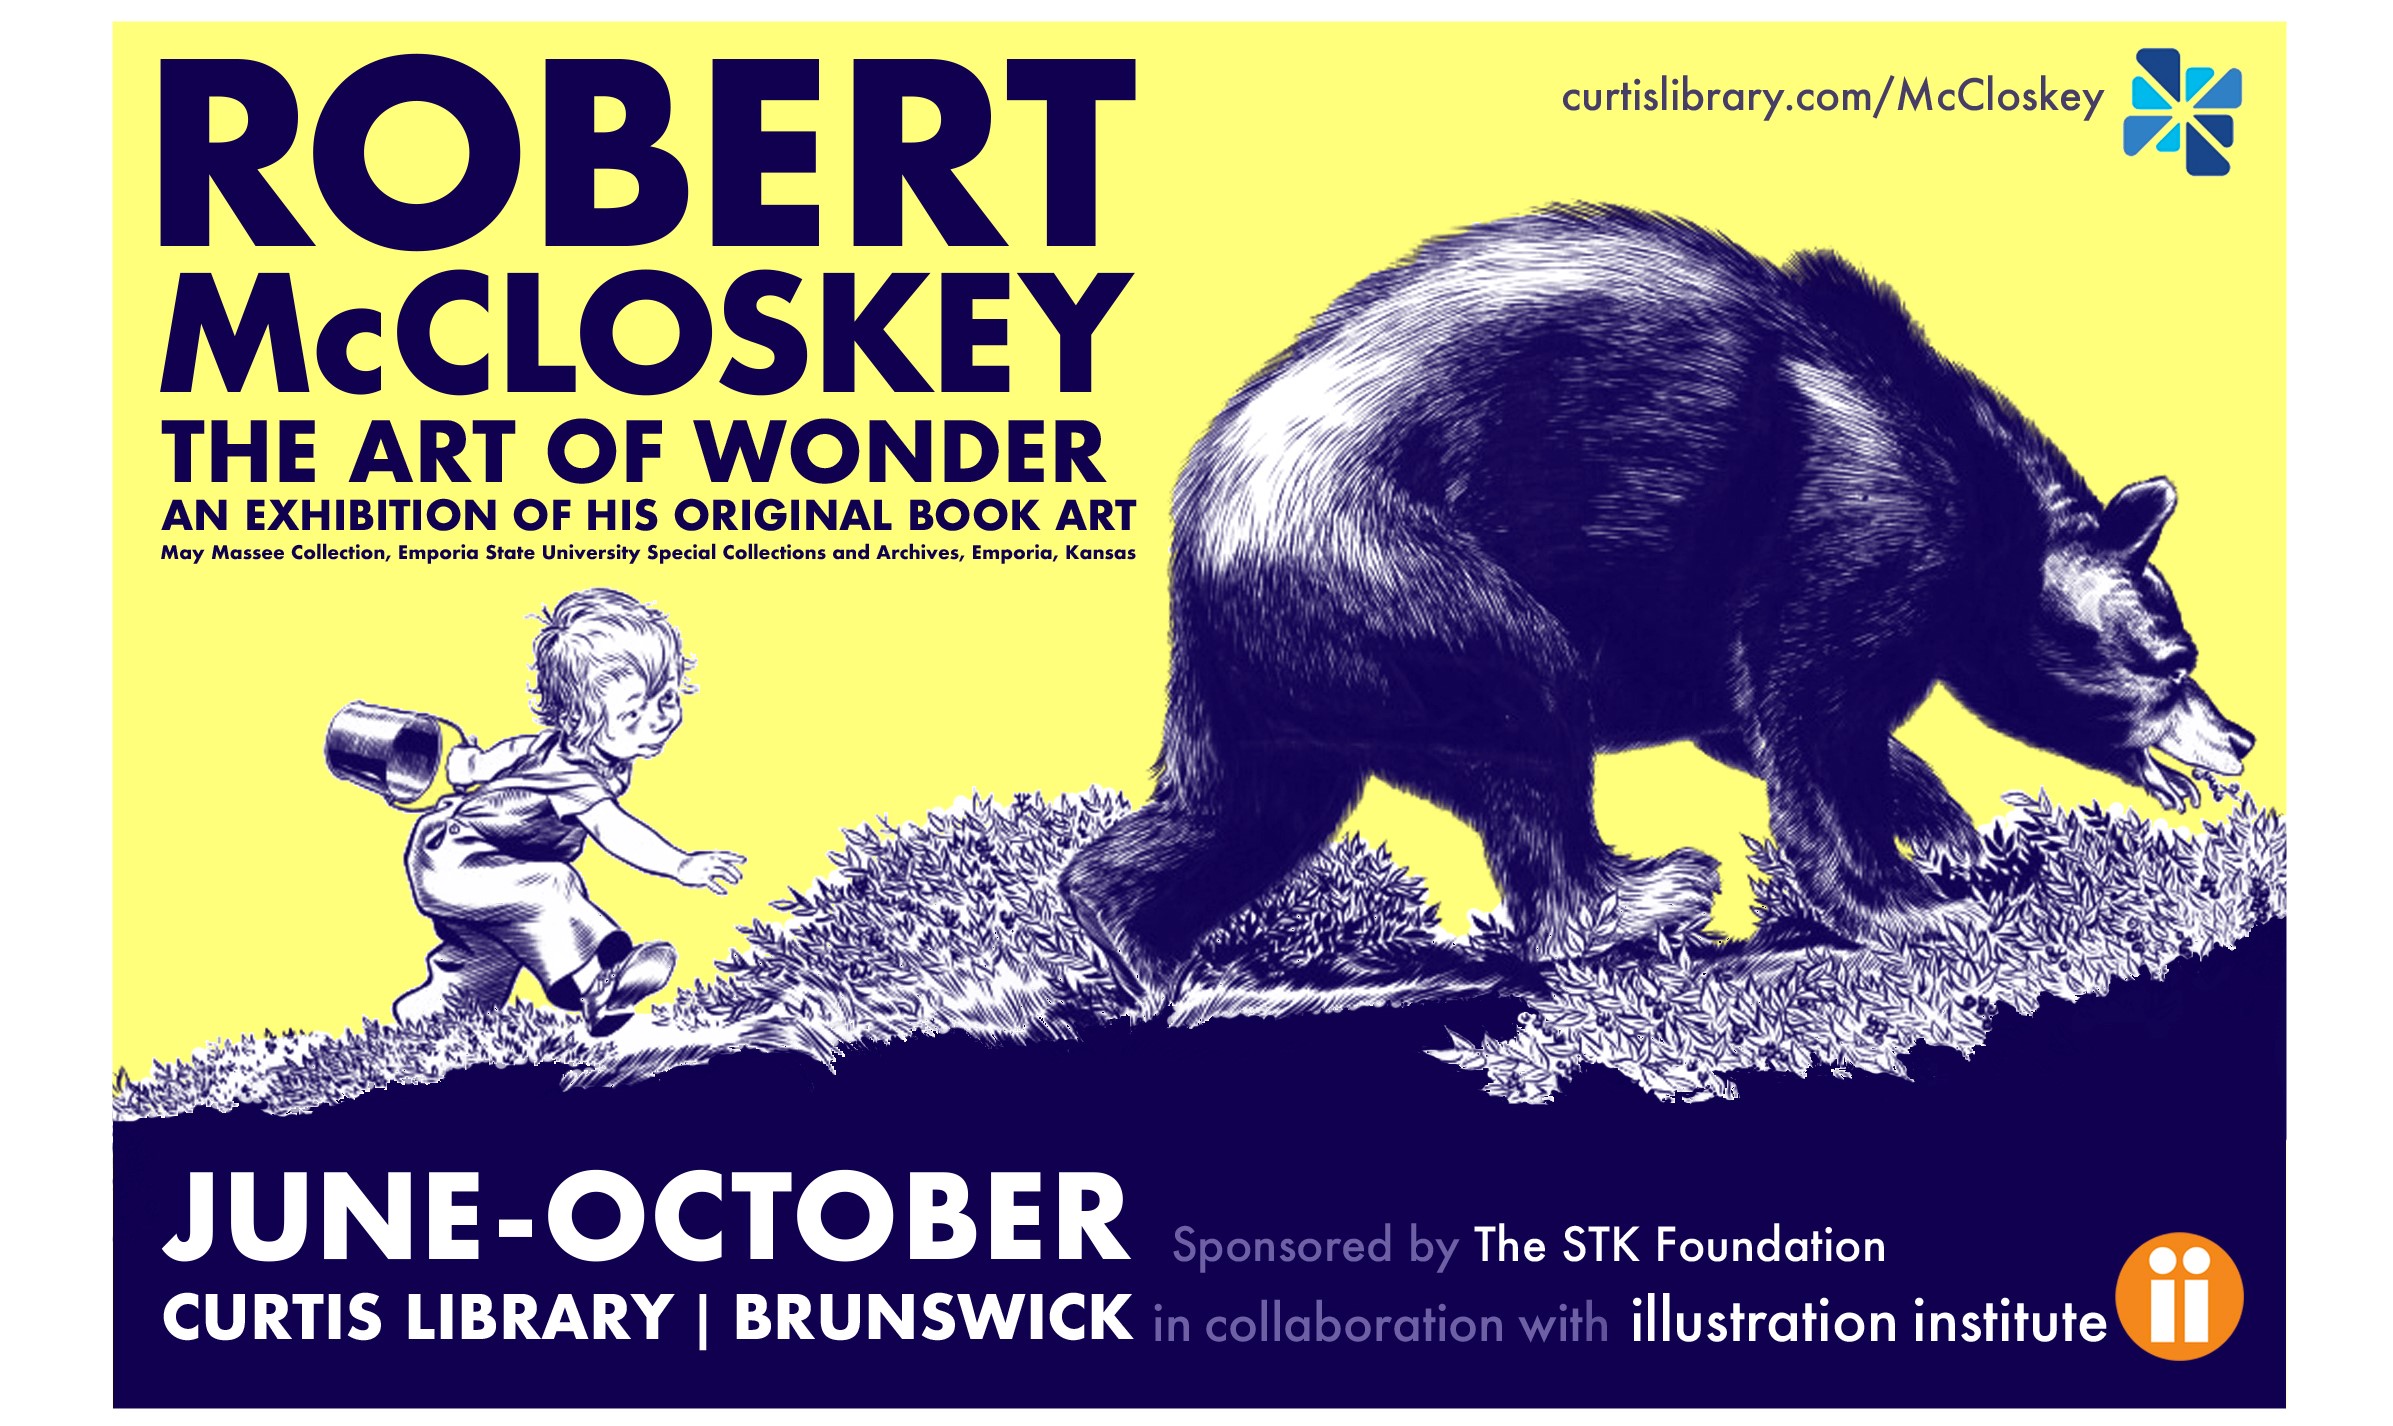 Robert McCloskey exhibit poster image